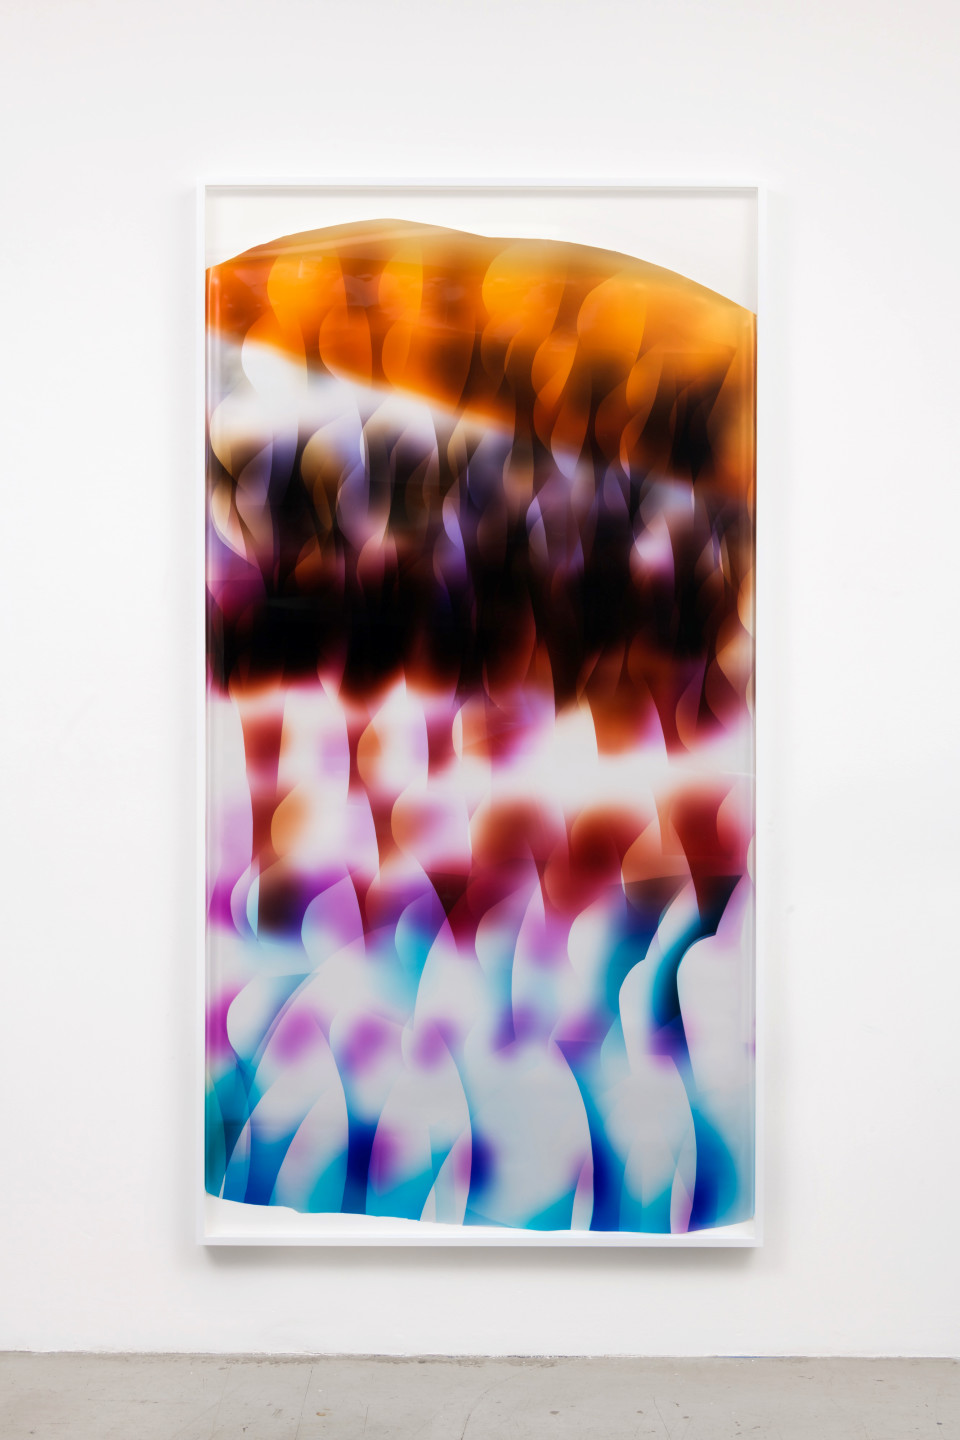 Image: Mariah Robertson  104, 2017  unique chromogenic print  92 x 49 inches (233.7 x 124.5 cm)